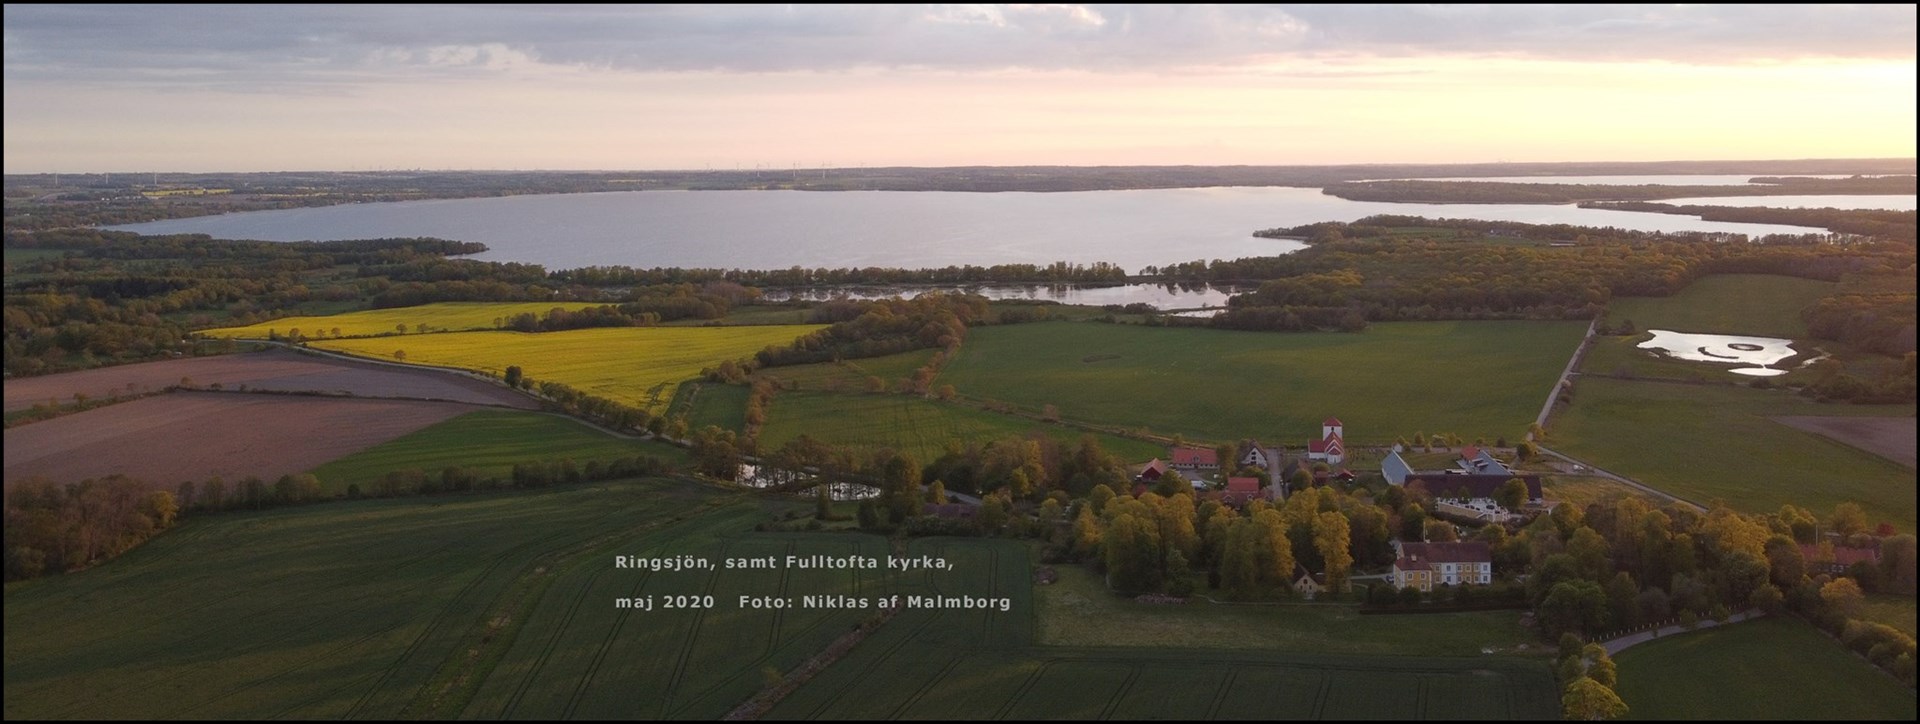 Ringsjöns Fiskevårdsområde, Skåne